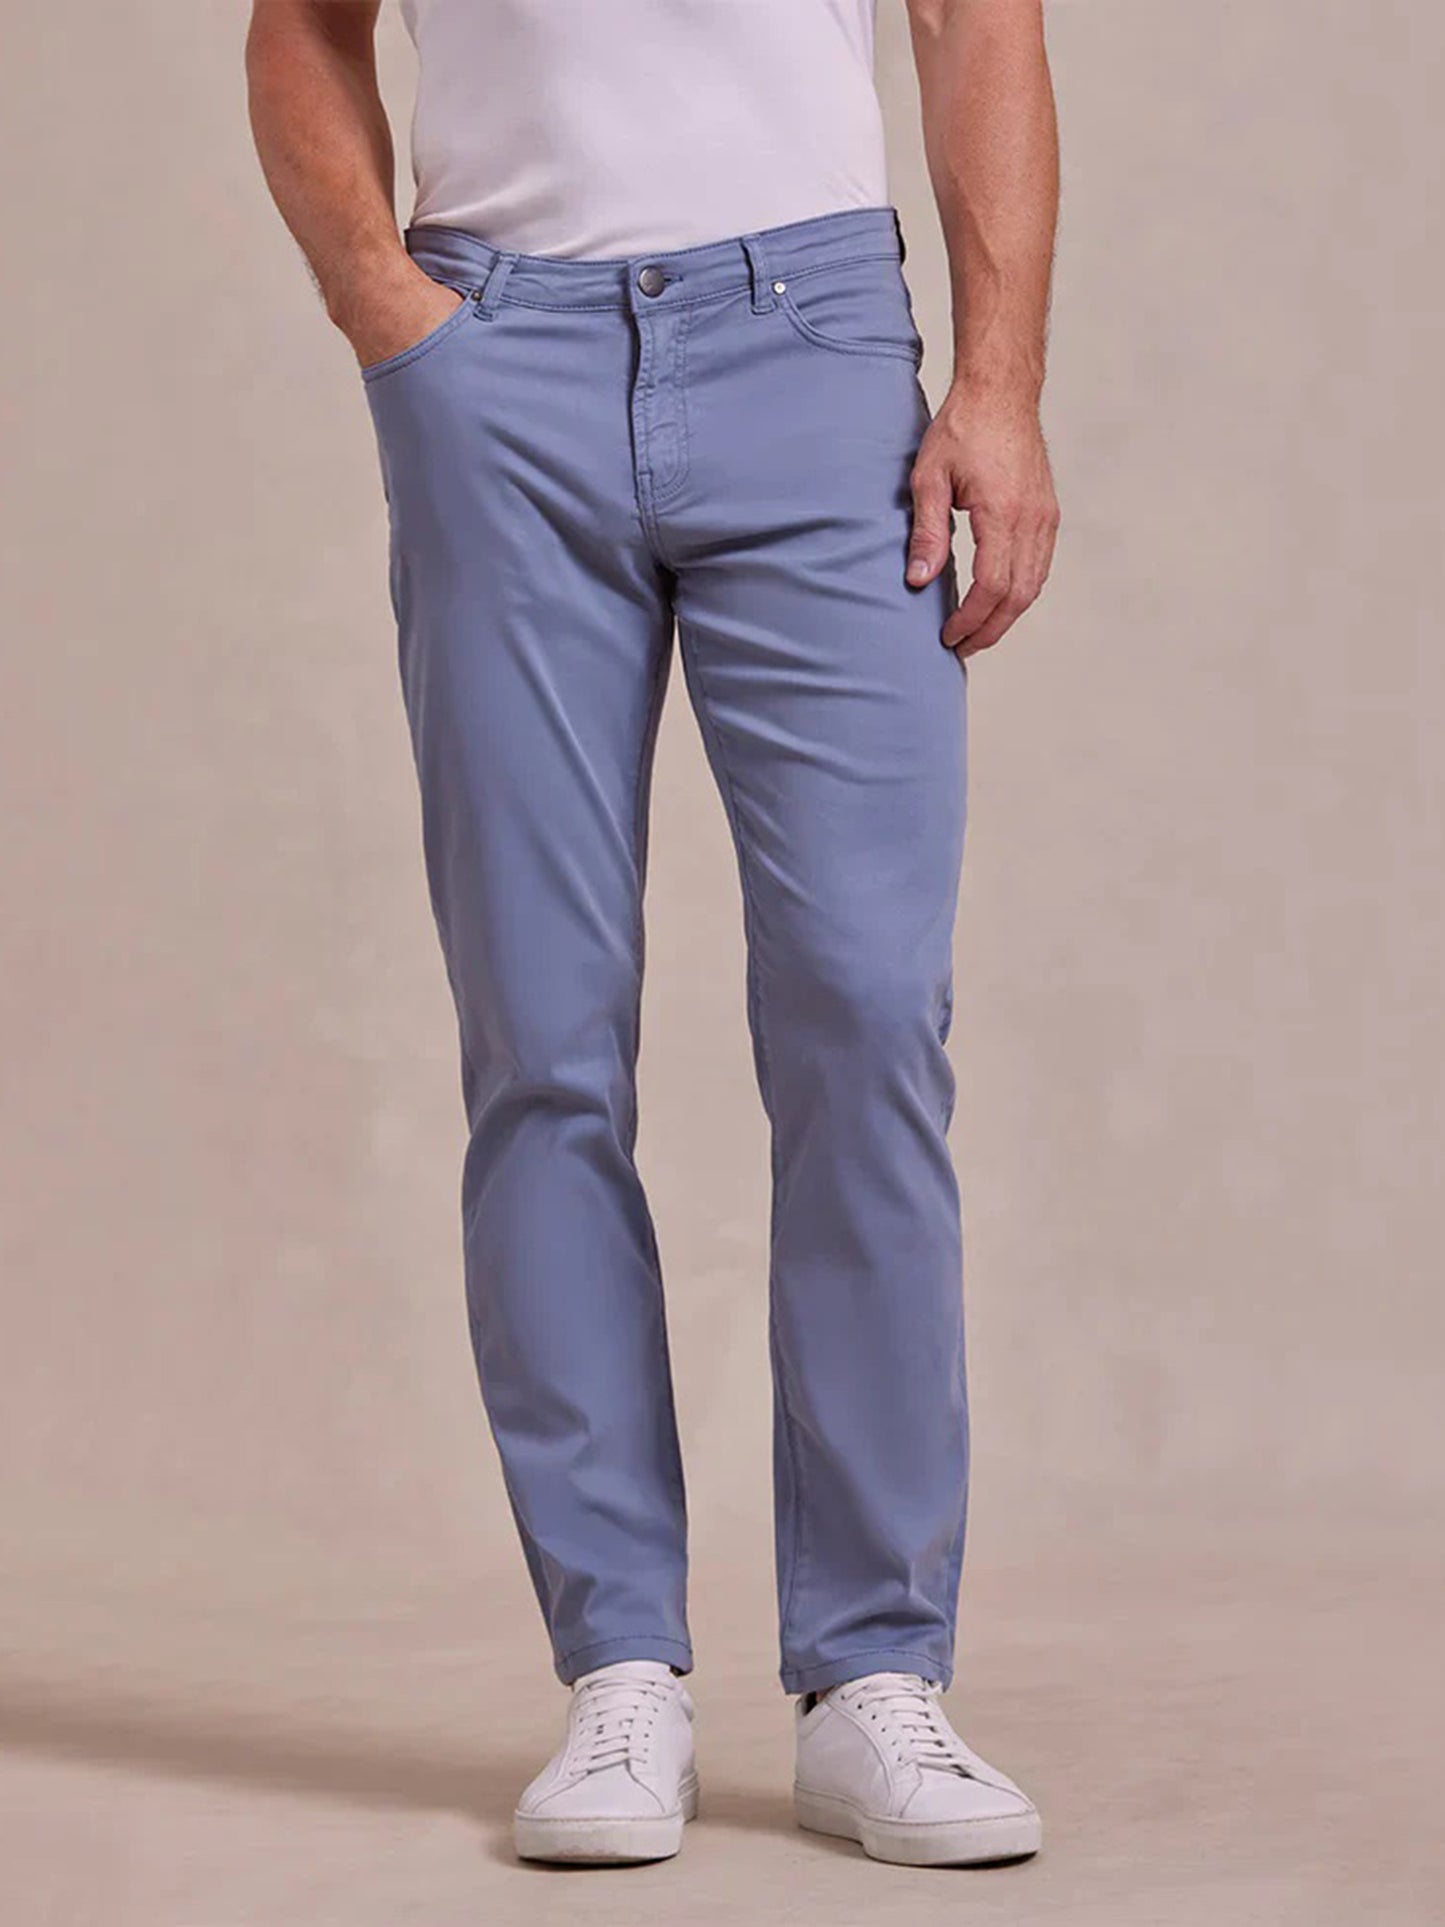 RYE51 Men's Silo Comfort Cotton 5-Pocket Pant